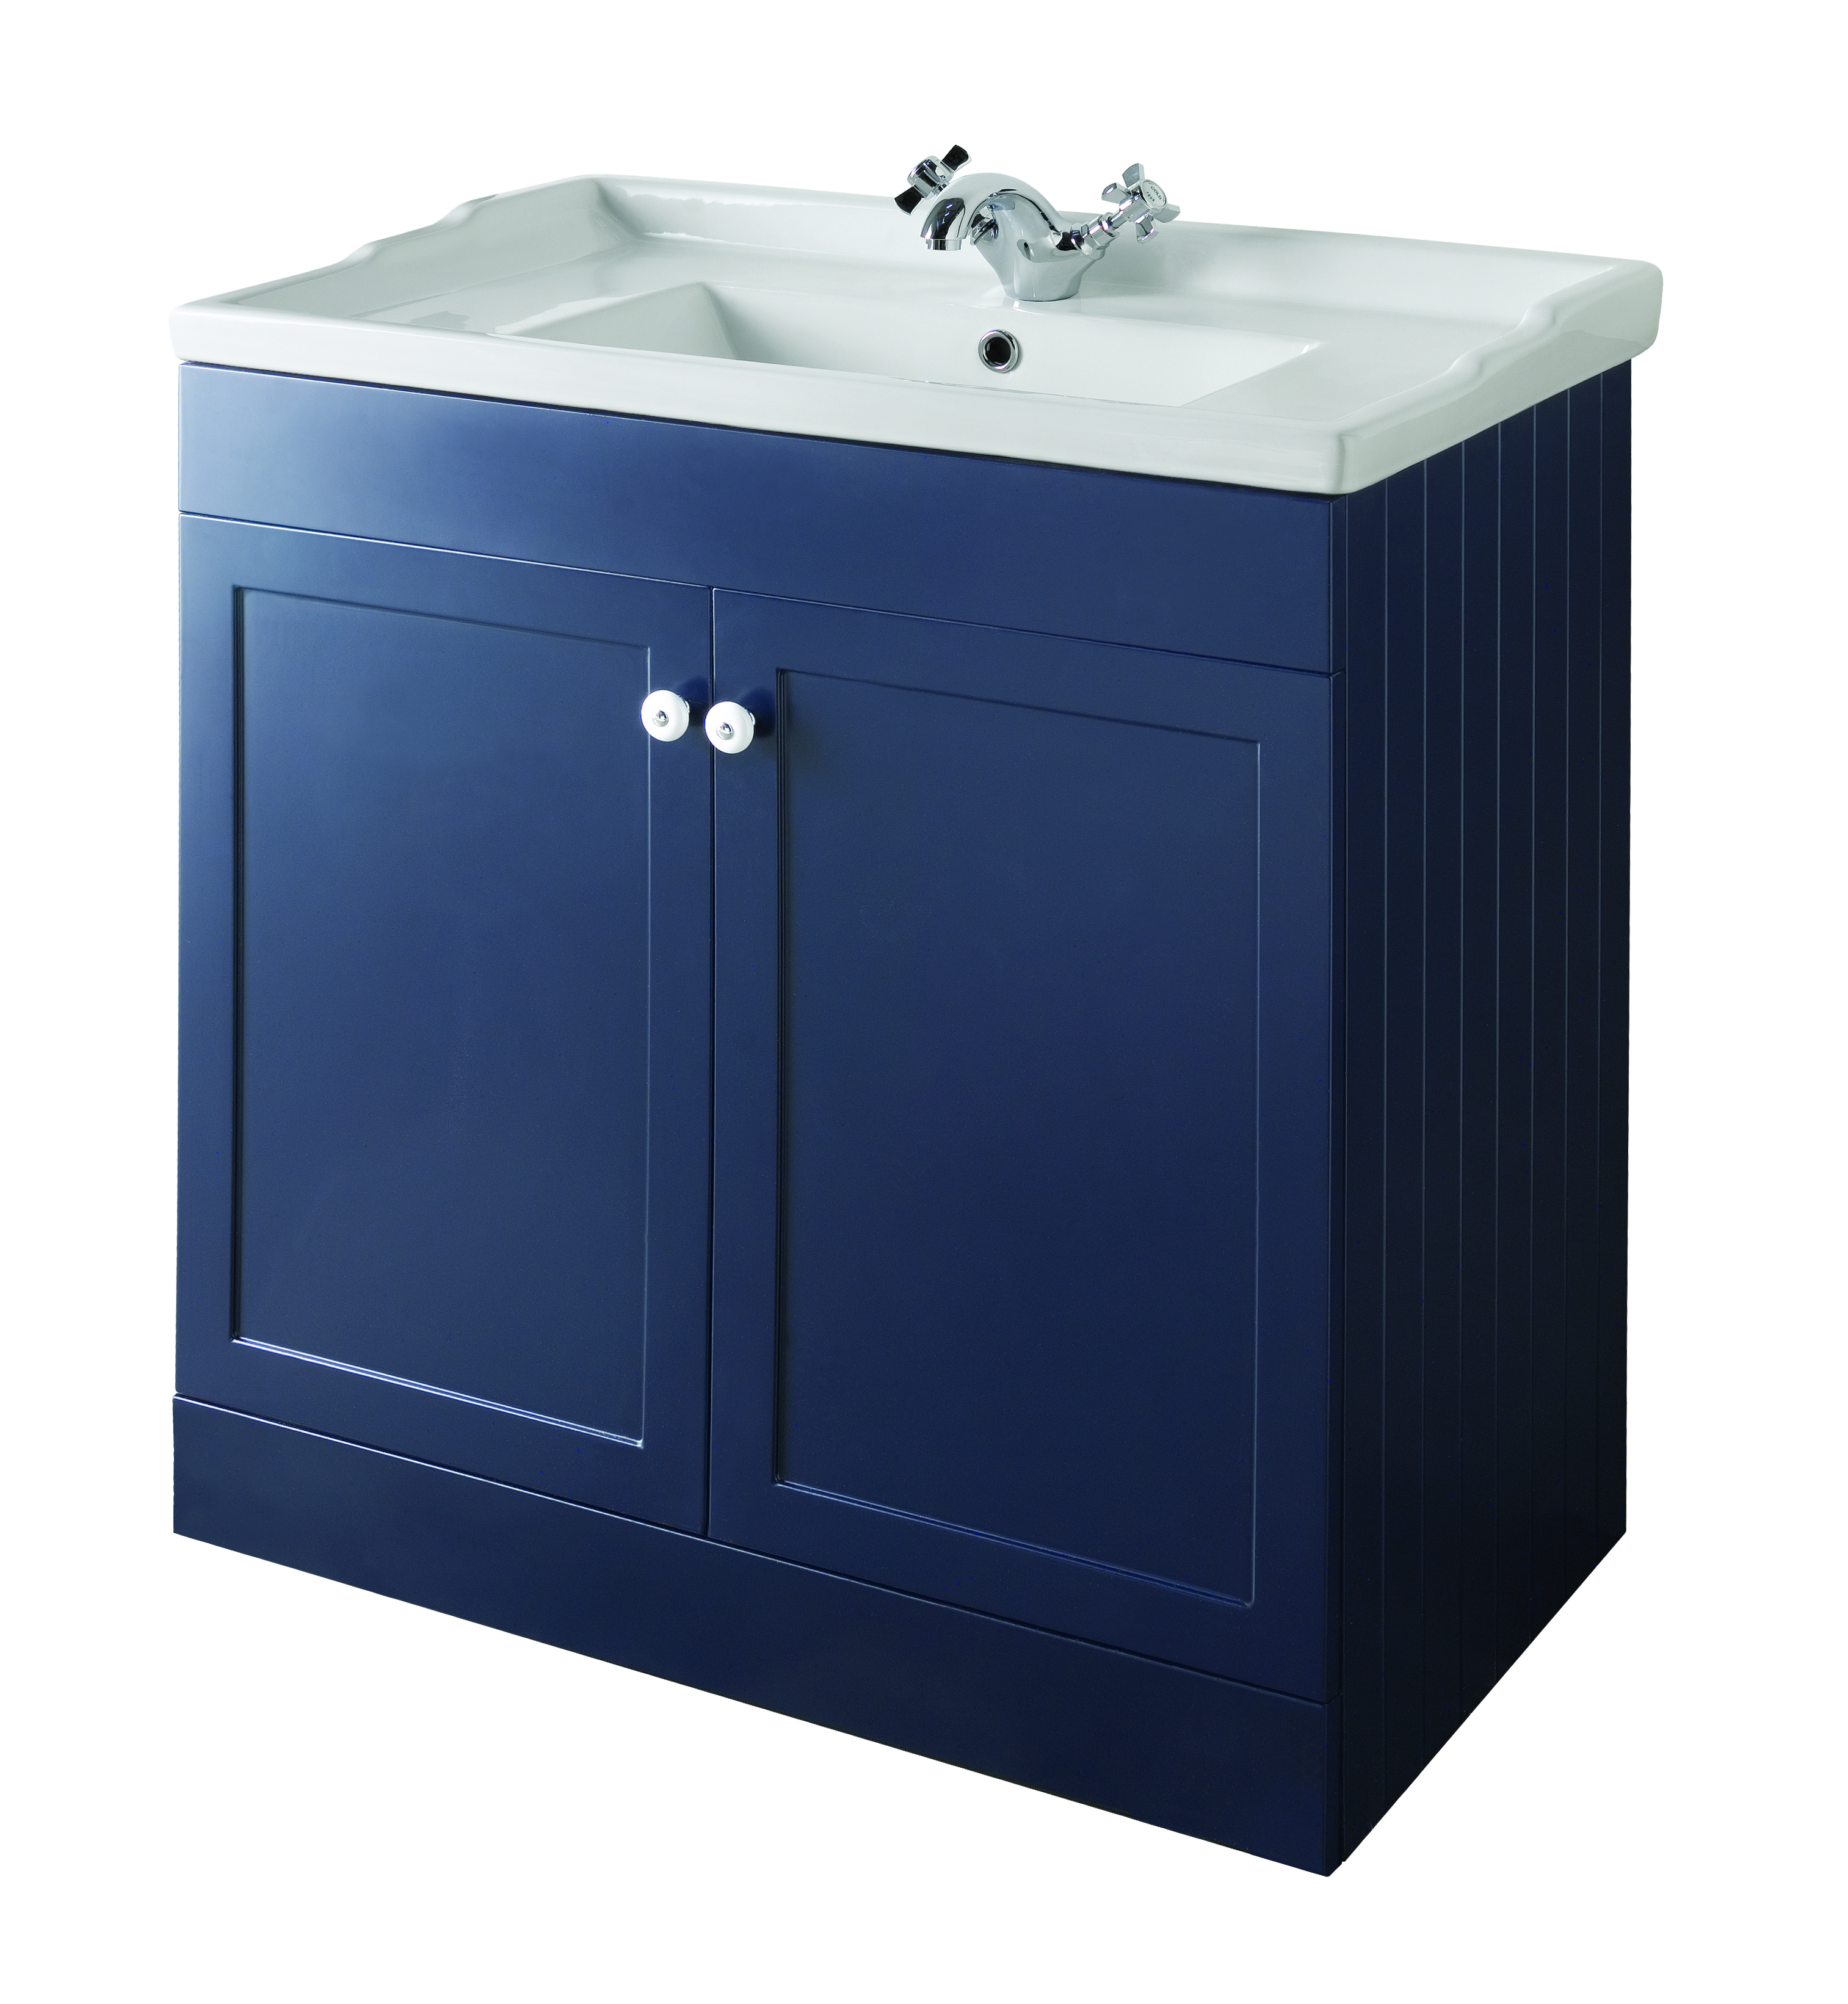 Bathroom Furniture, 800mm Unit - Matt Sapphire Blue, STRABANE WHOLESALE LTD, Strabane, Co. Tyrone